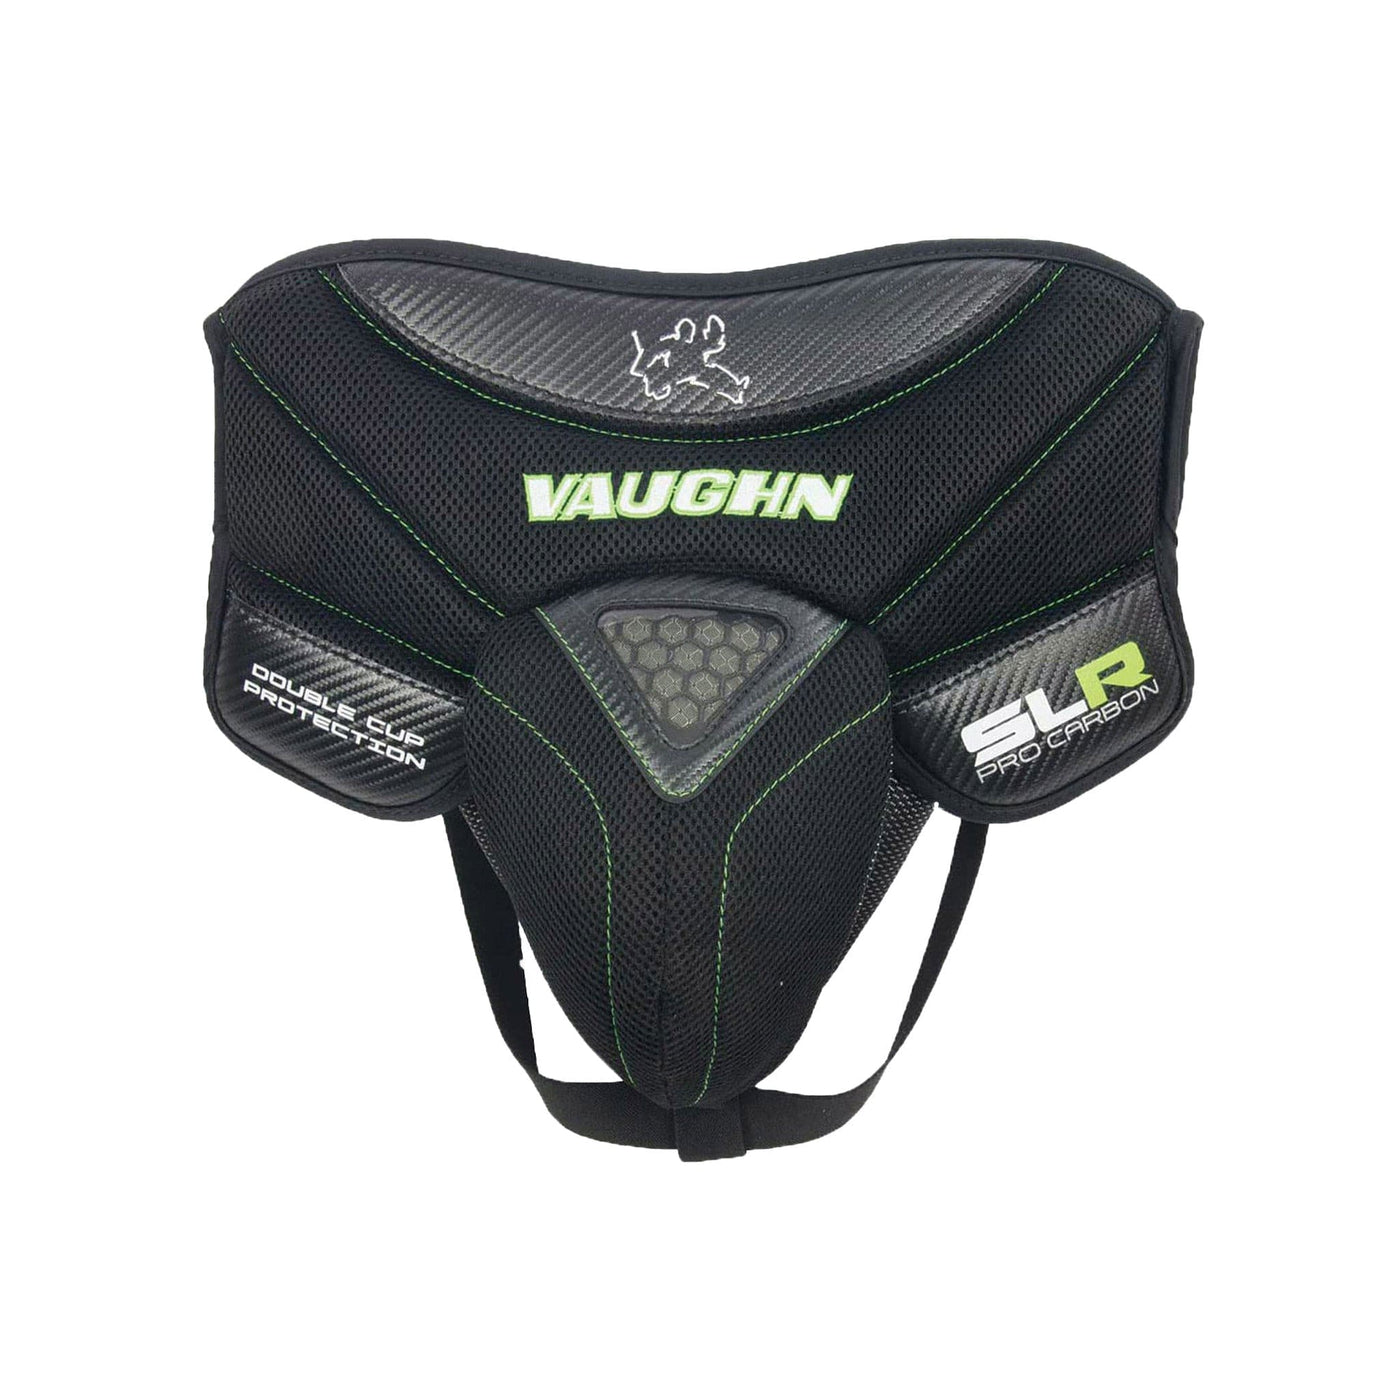 Vaughn Ventus SLR2 Pro Carbon Intermediate Goalie Jock